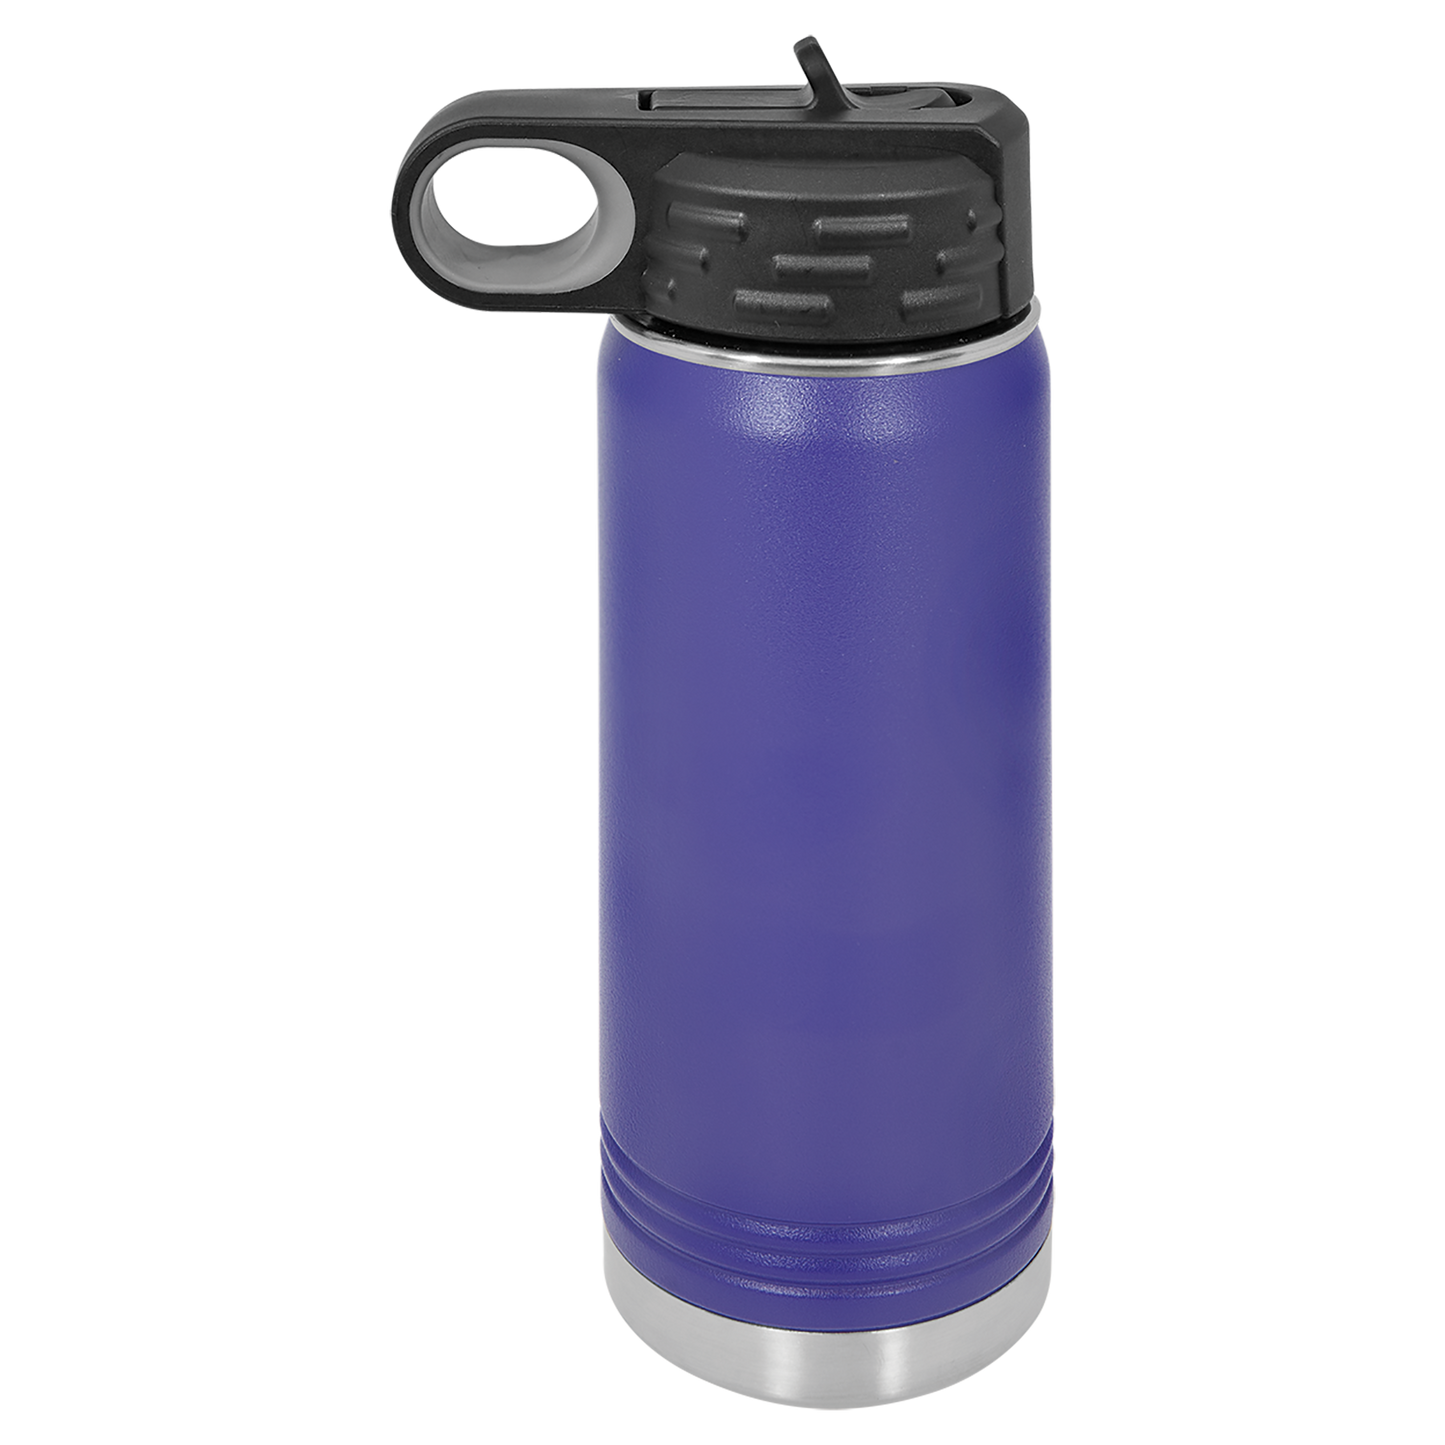 20 oz Water Bottle - Southwest Design #3